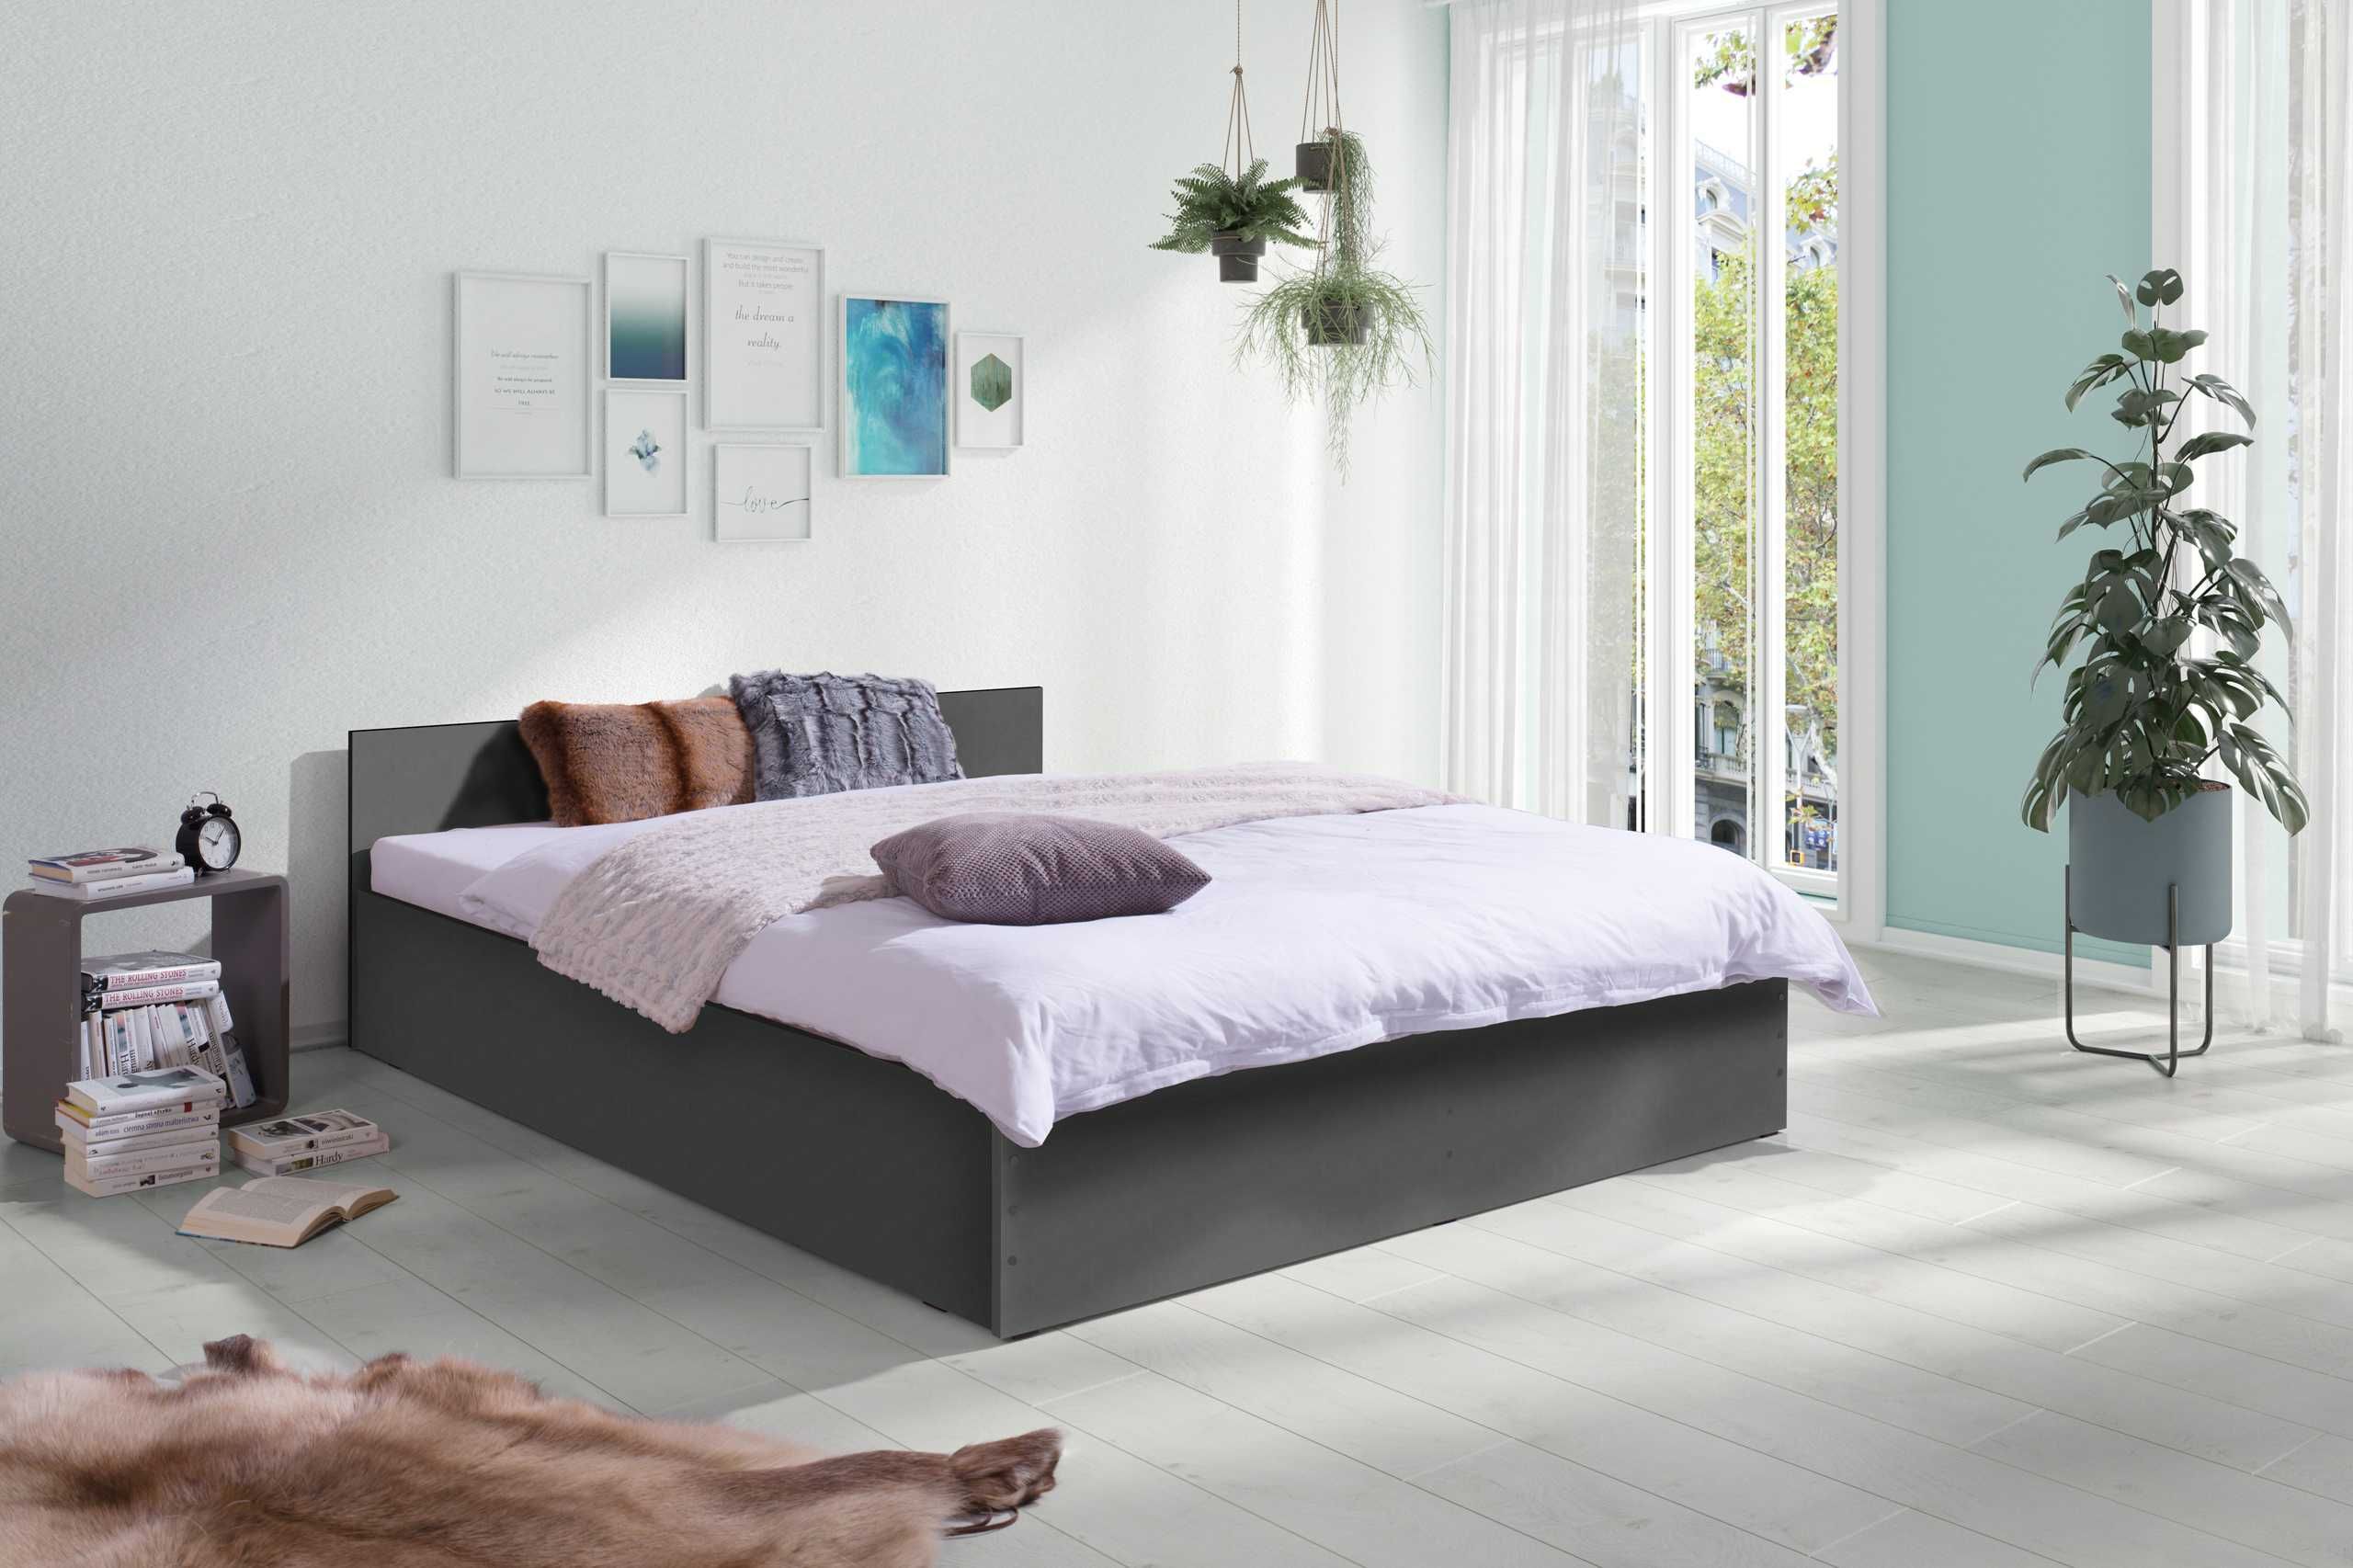 Nowe Łóżko z Materacem 160 x 200 Kompletne od Producenta Promocja